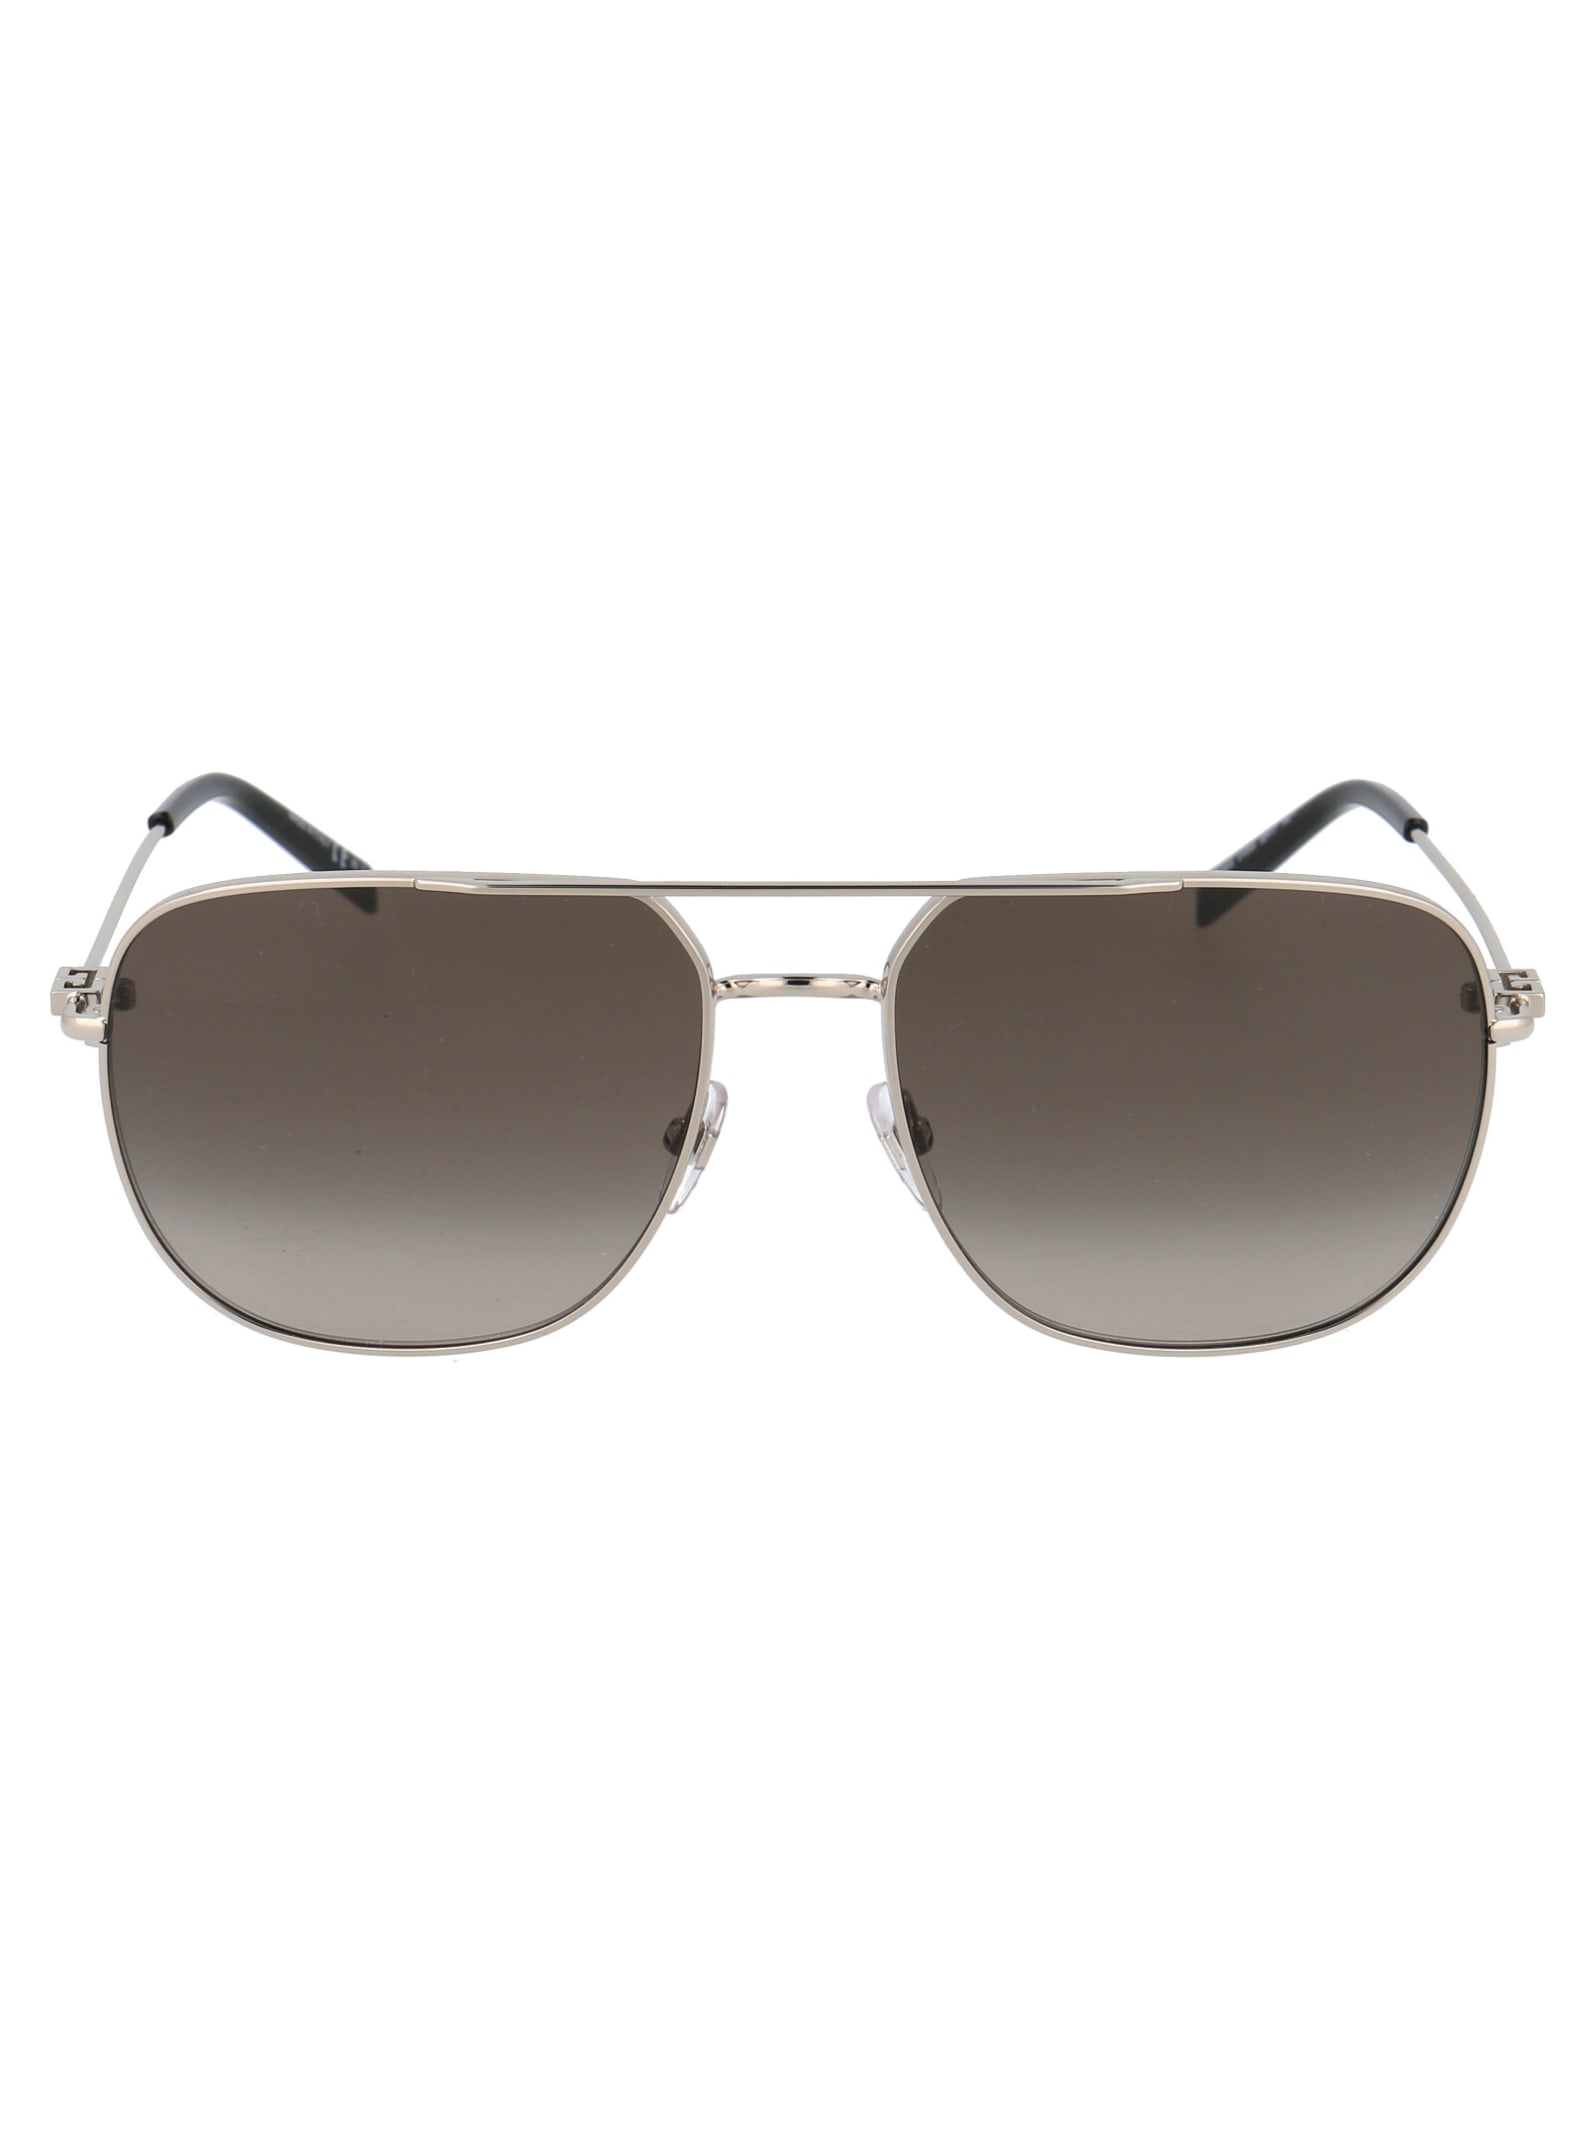 Givenchy Gv 7195/s Sunglasses In 010ha Palladium | ModeSens